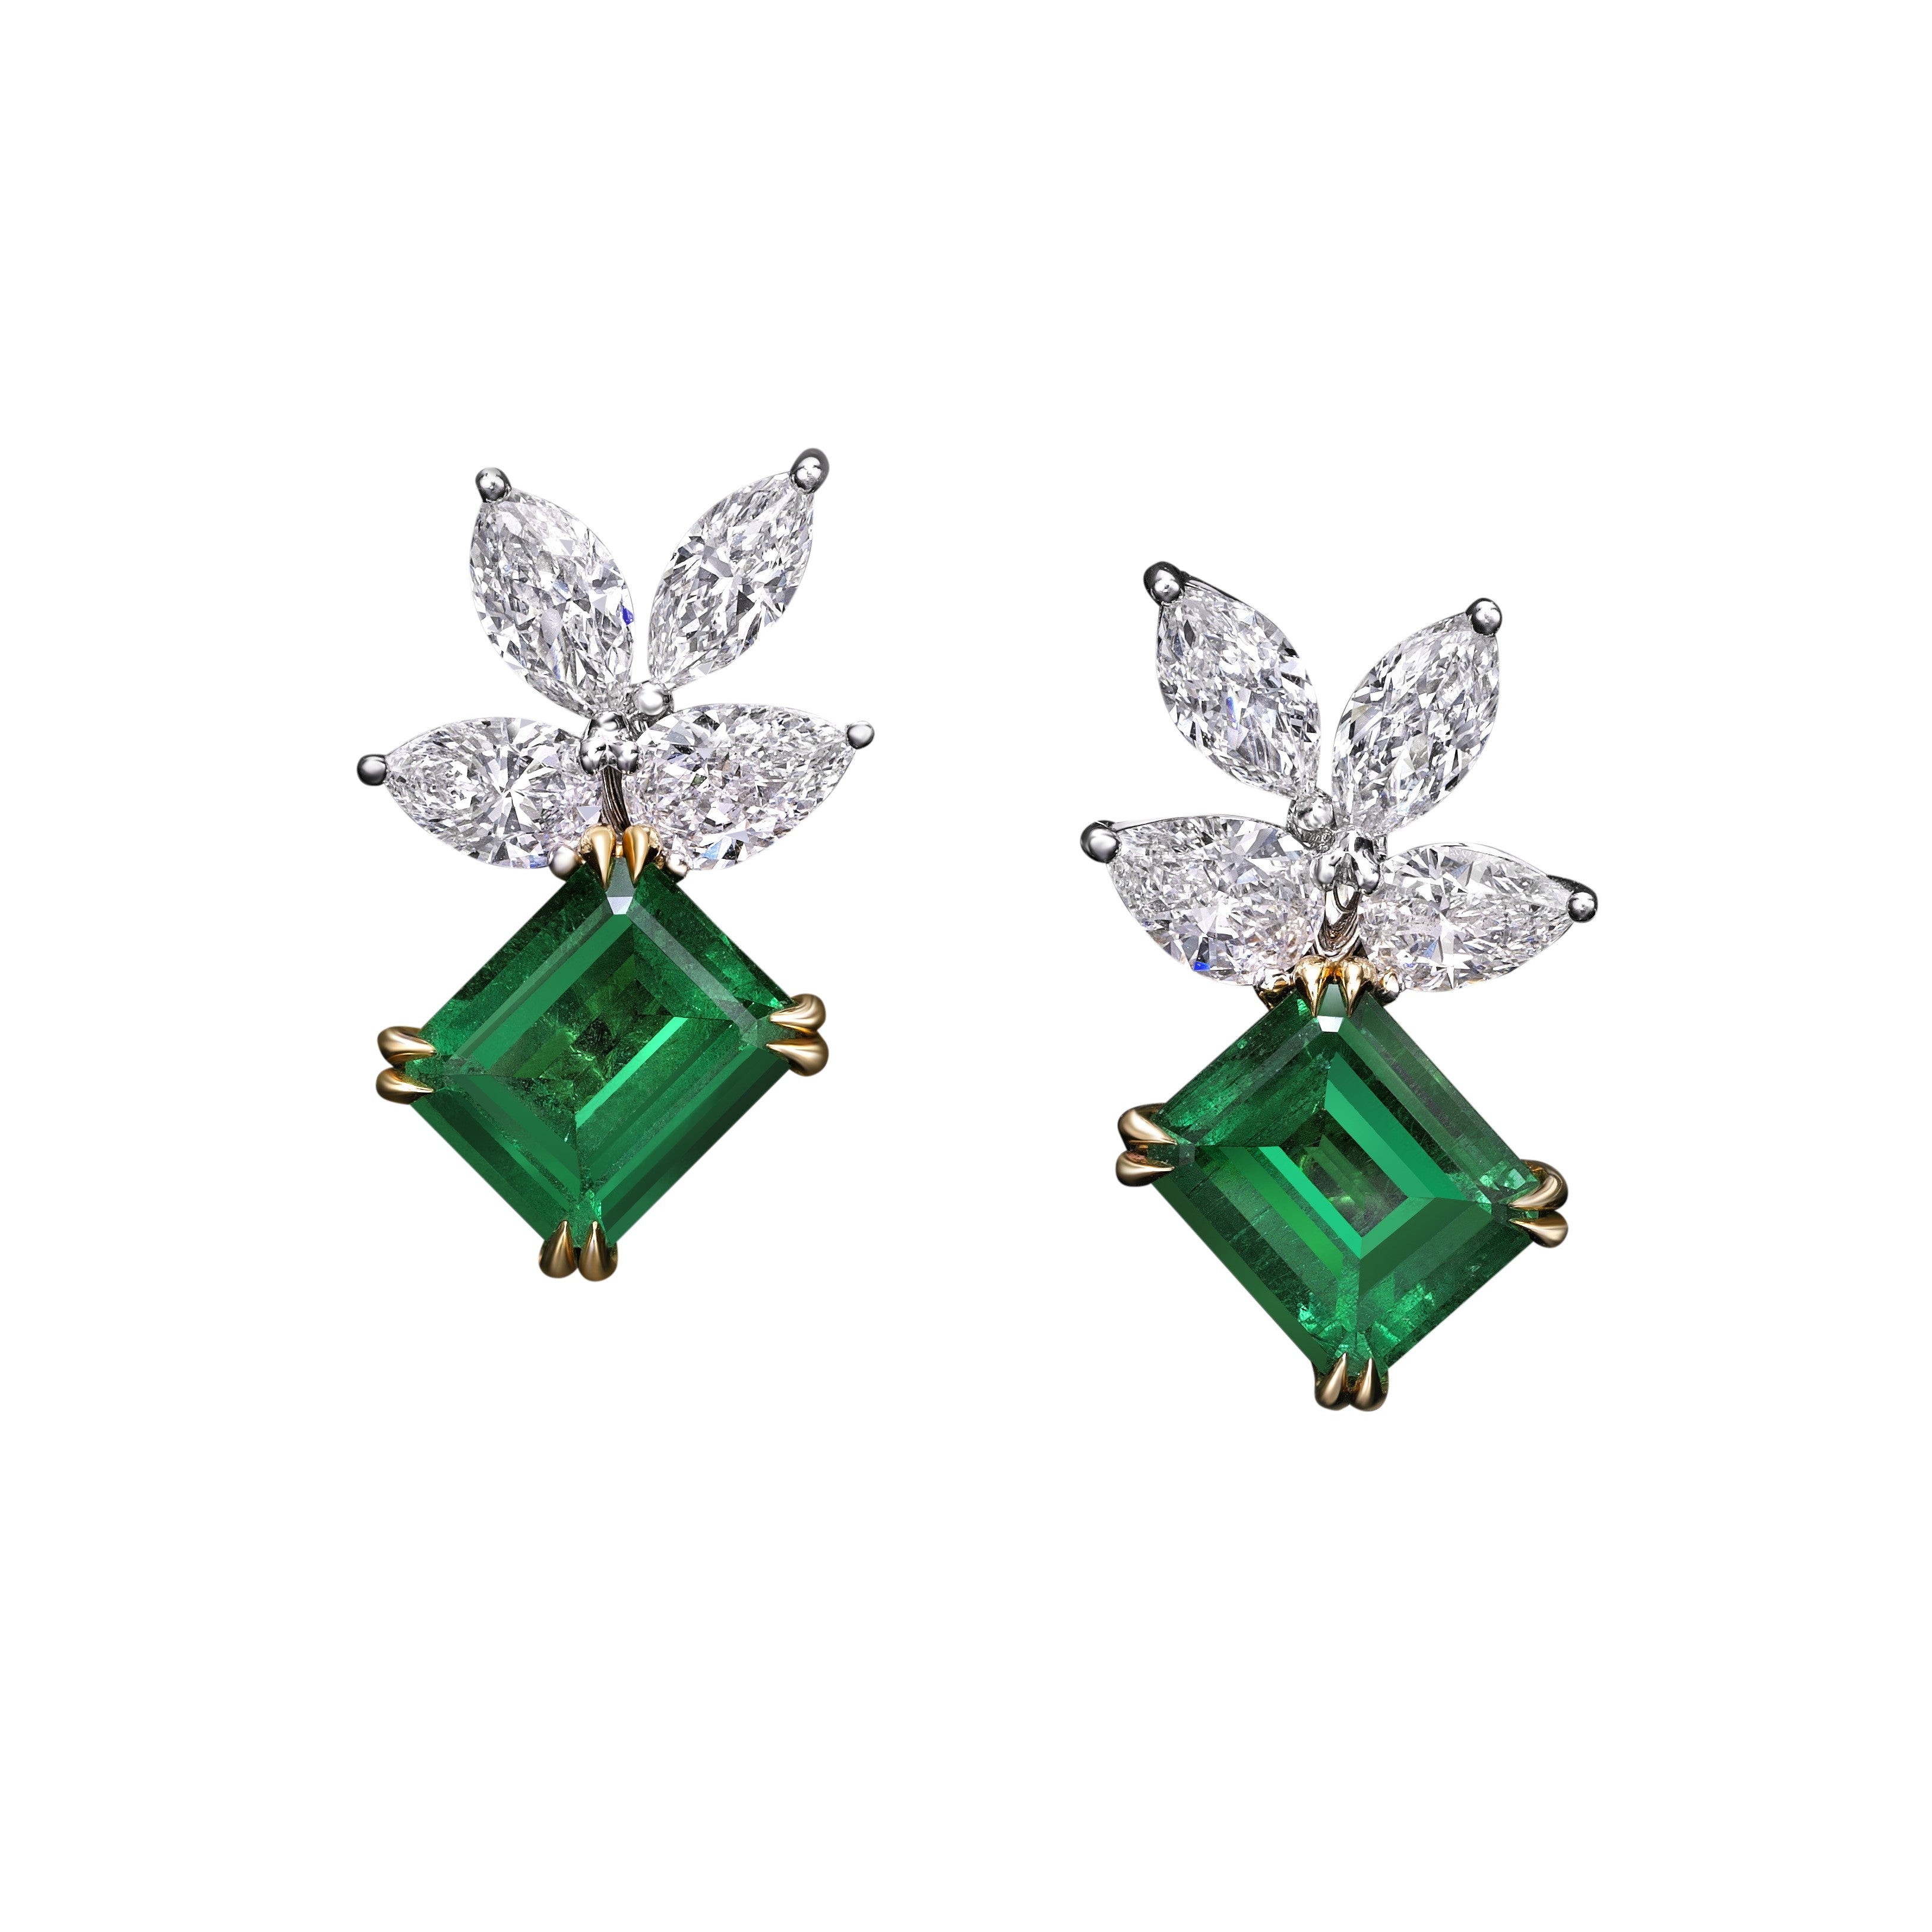 Emerald Earrings with Diamonds - 8.98ct TW